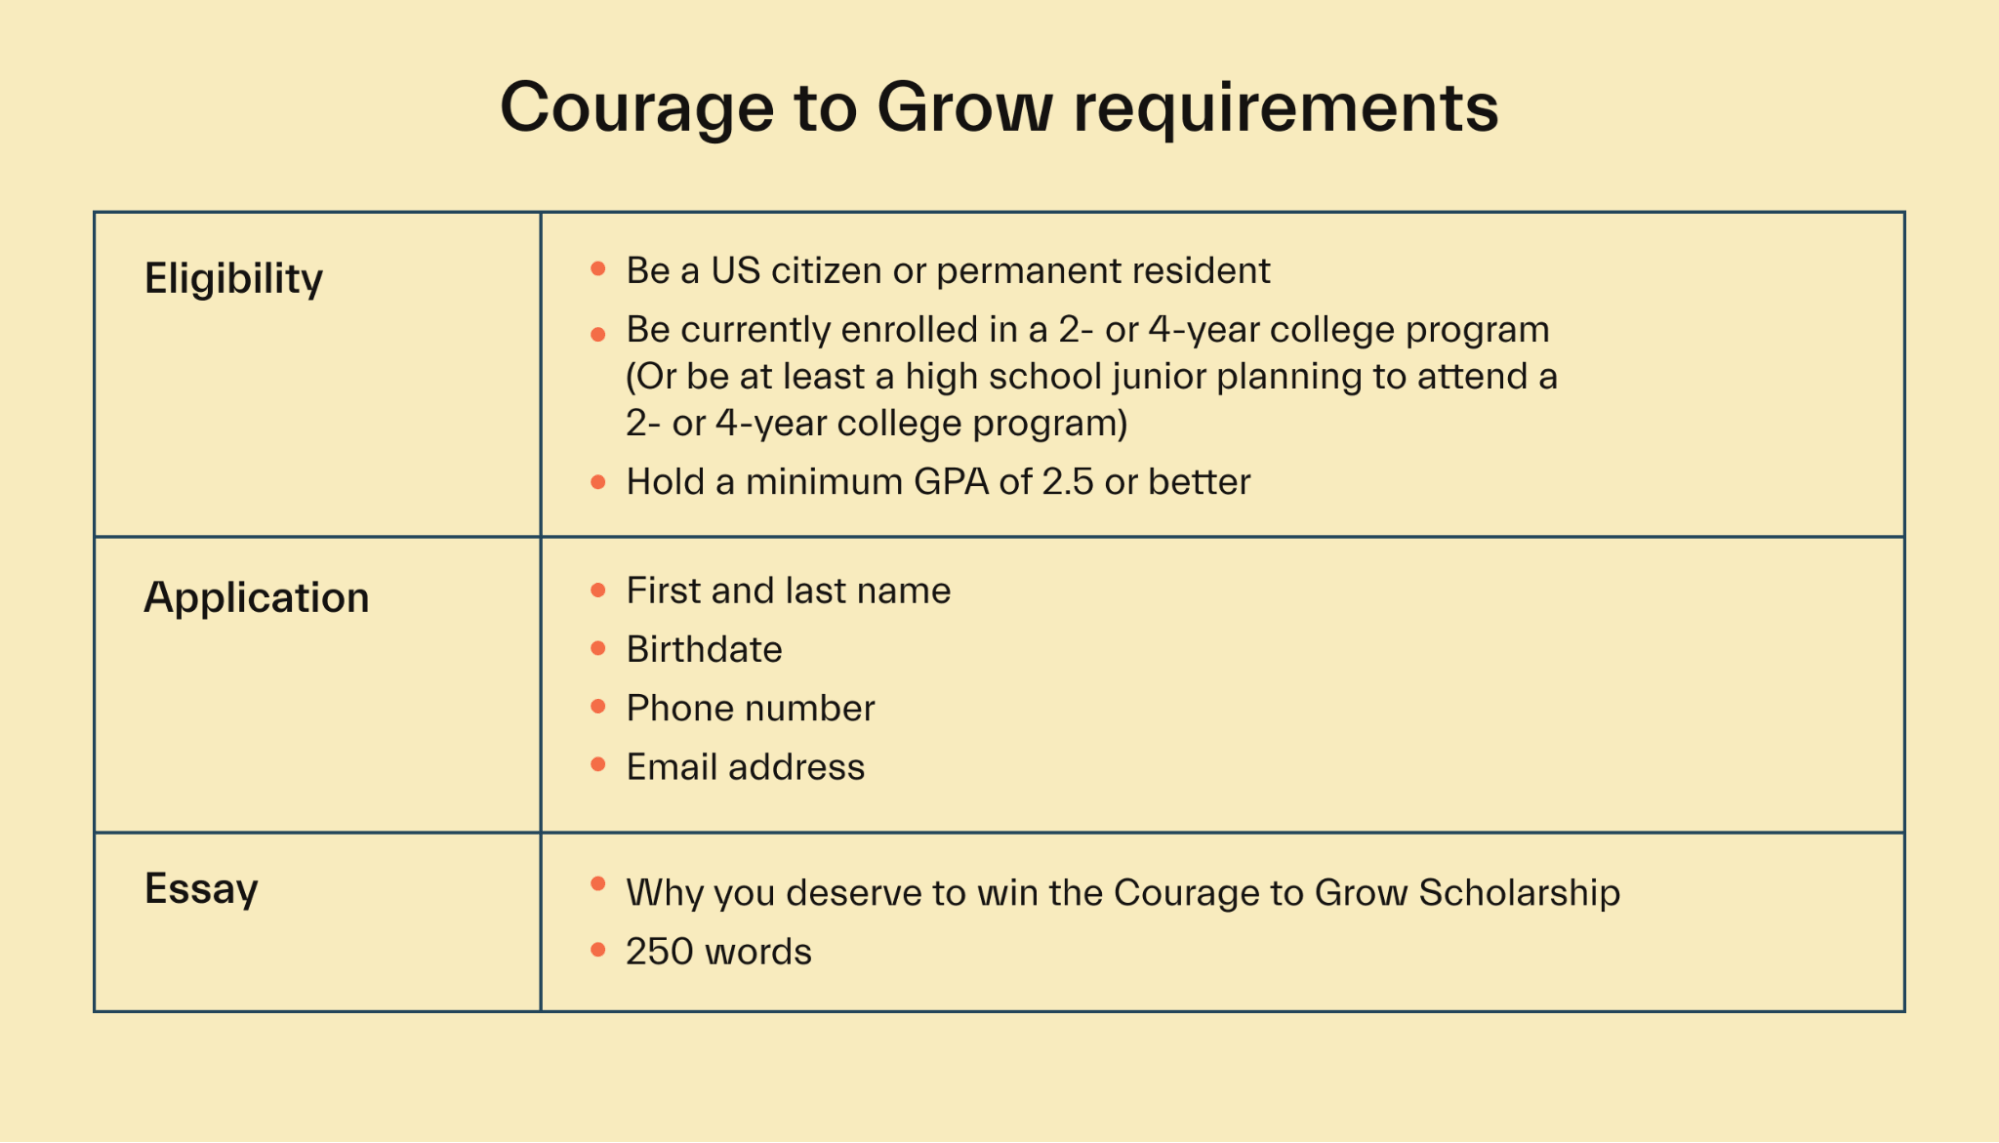 Courage to Grow Scholarship